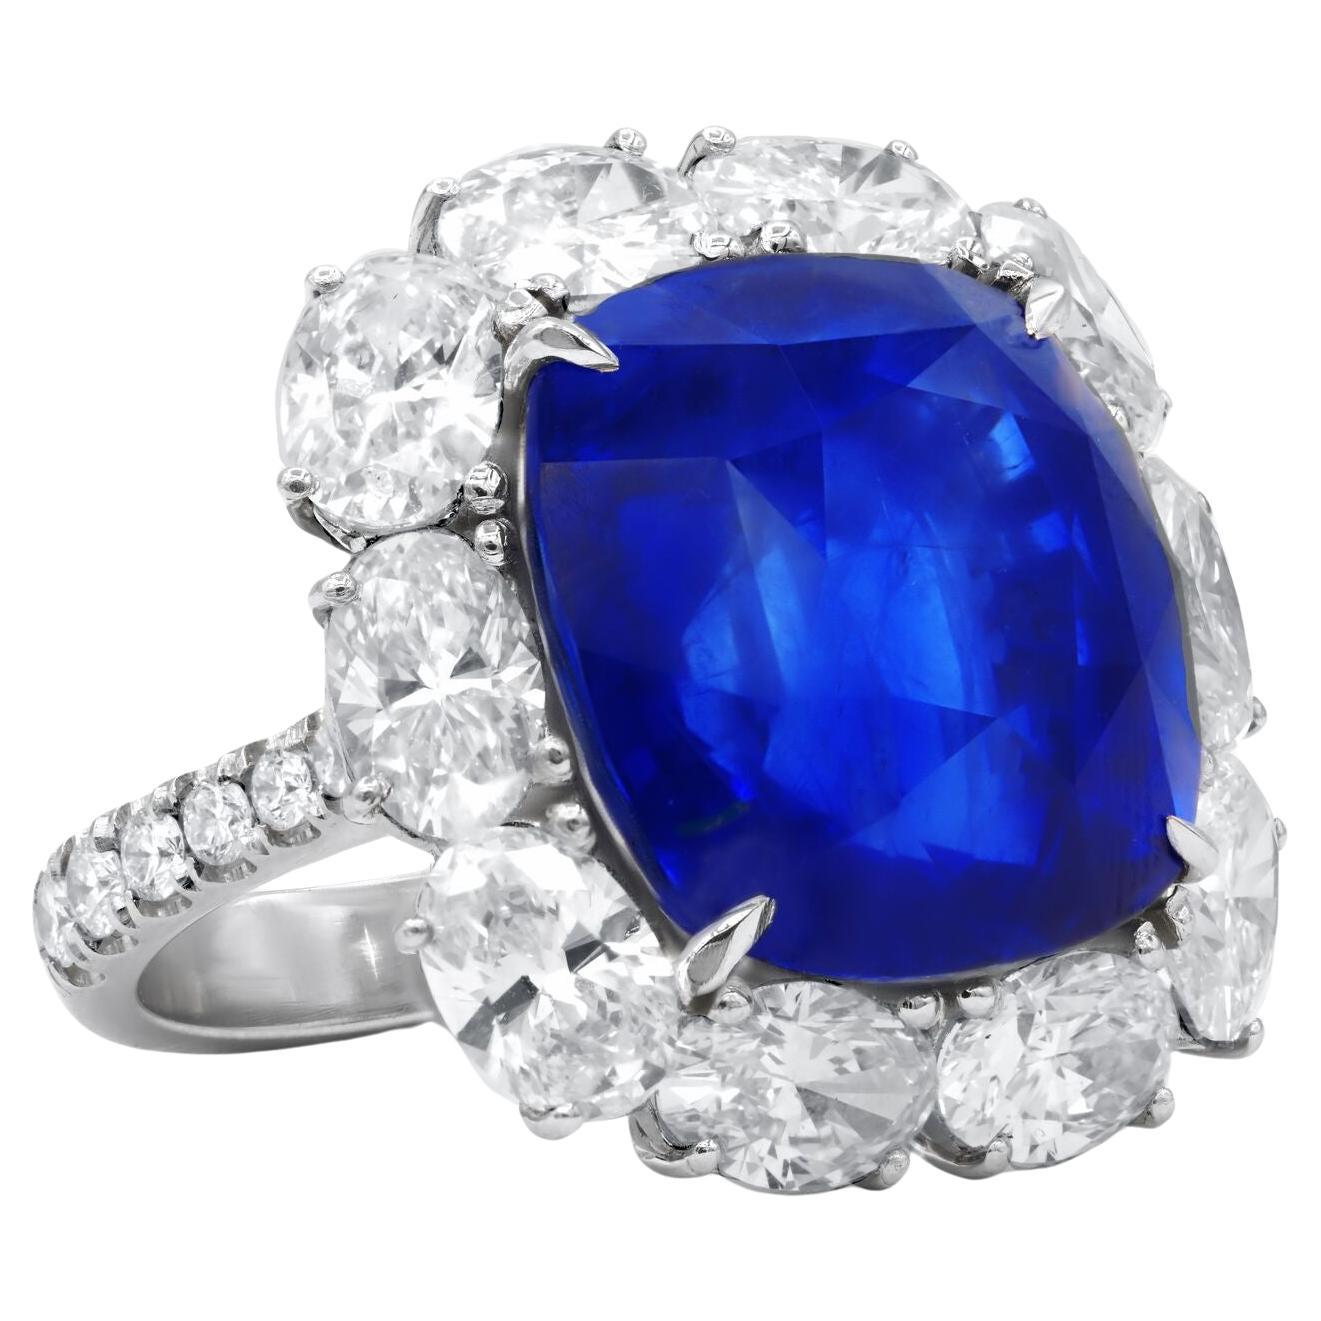 Diana M. Platinum sapphire and diamond ring GRS certified 24.38ct sapphire 